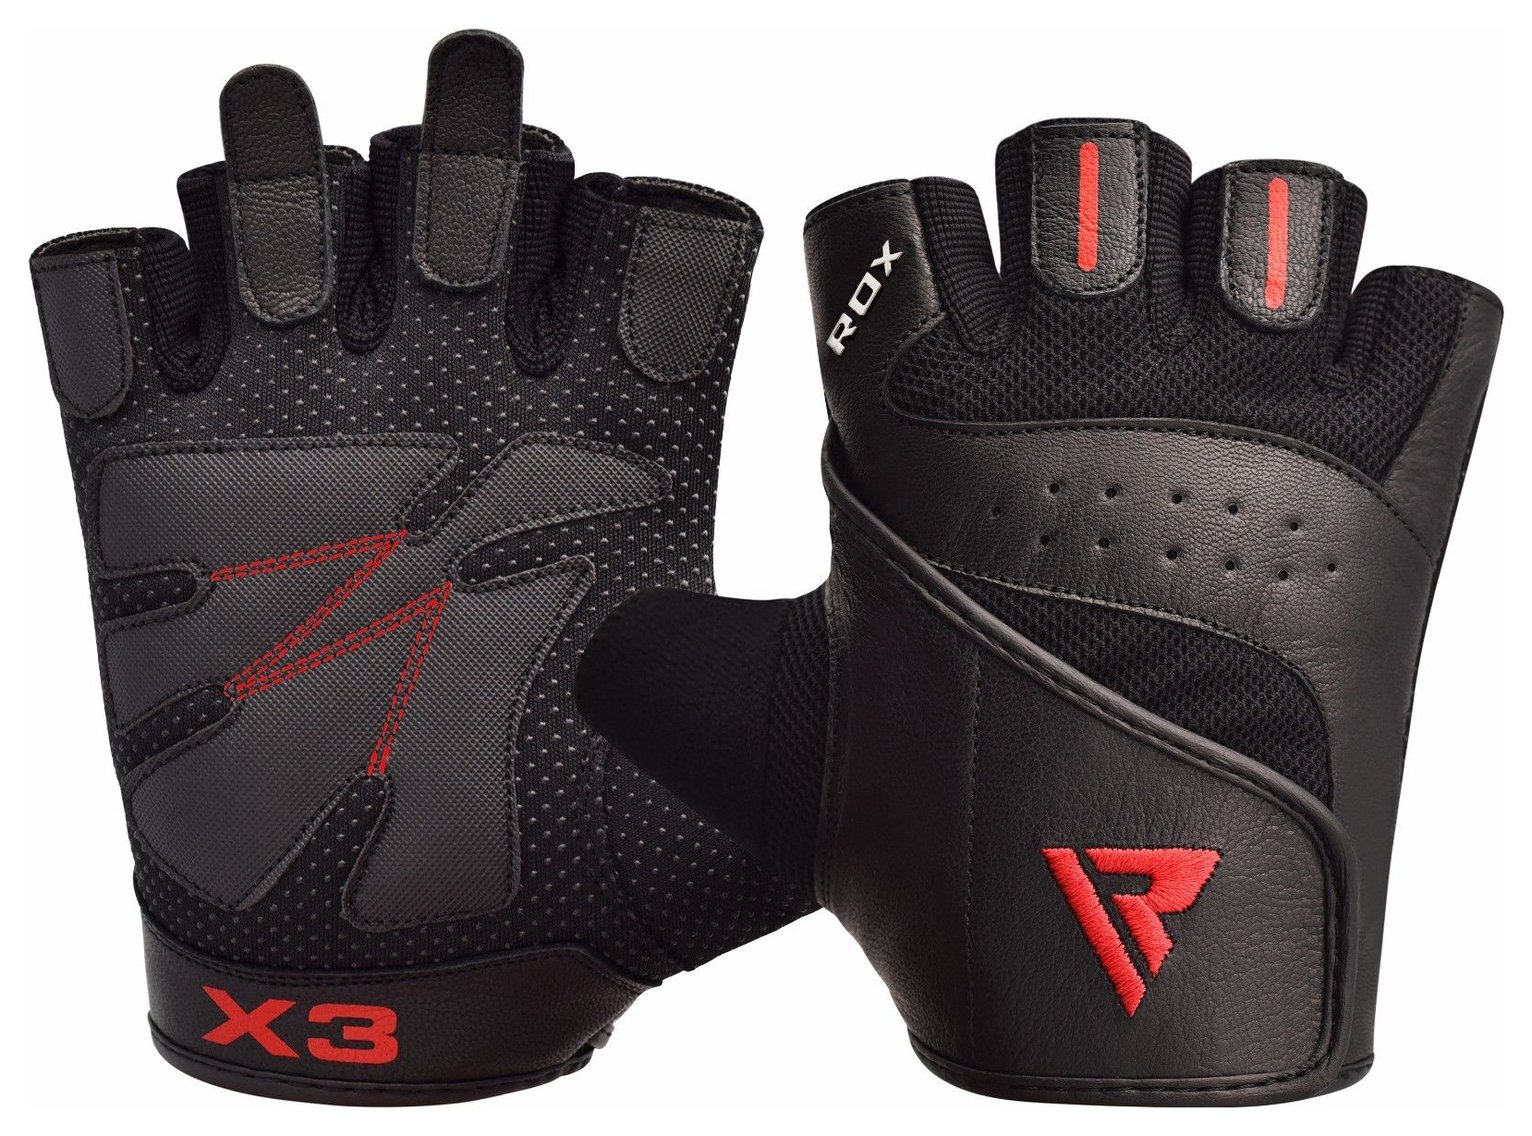 RDX Medium/Large Bodybuilding Gloves review